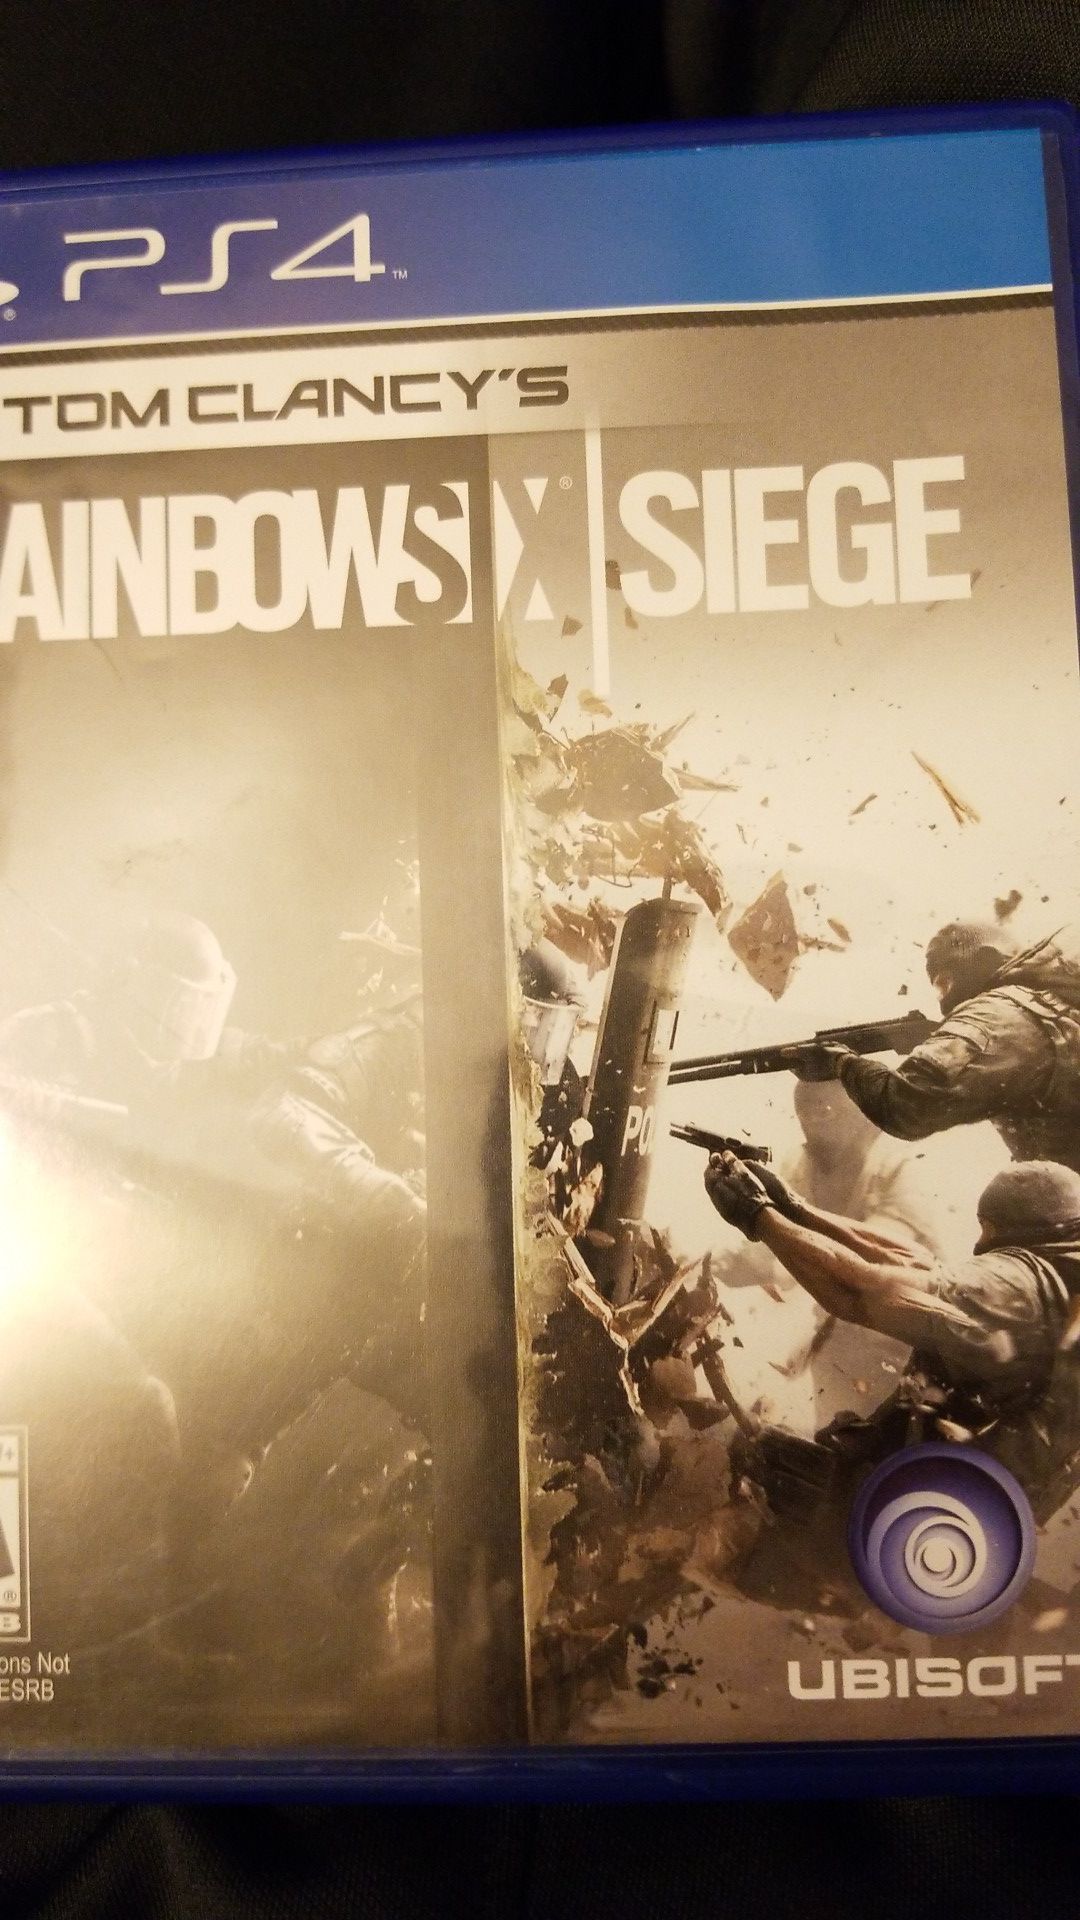 Rainbowssix siege